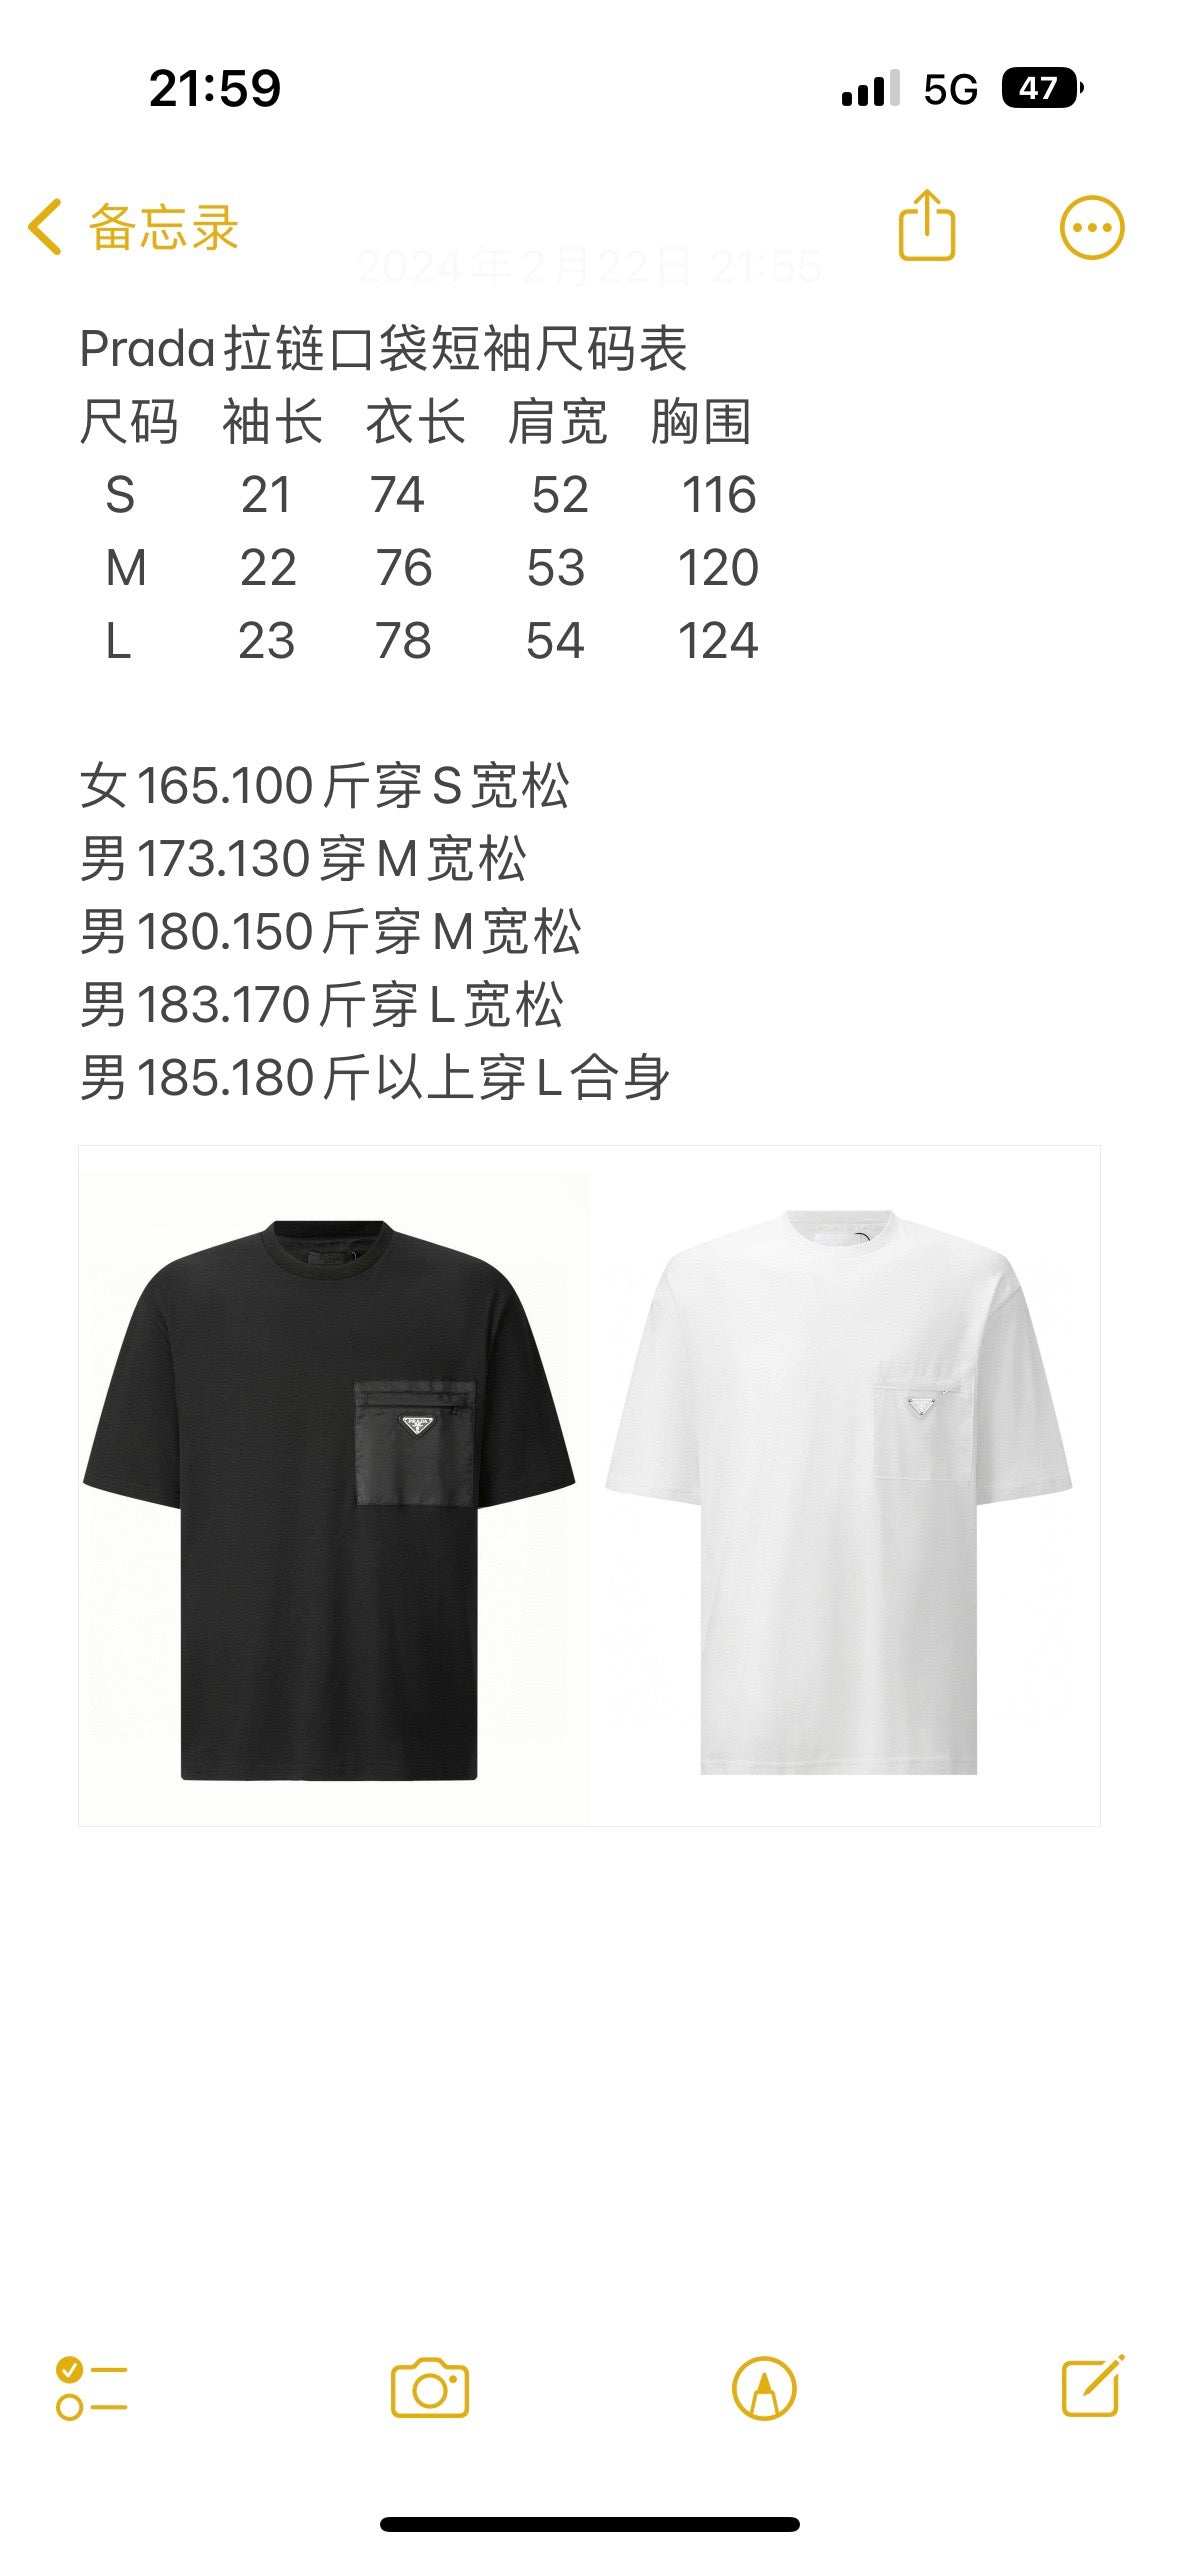 Black and White T-shirt